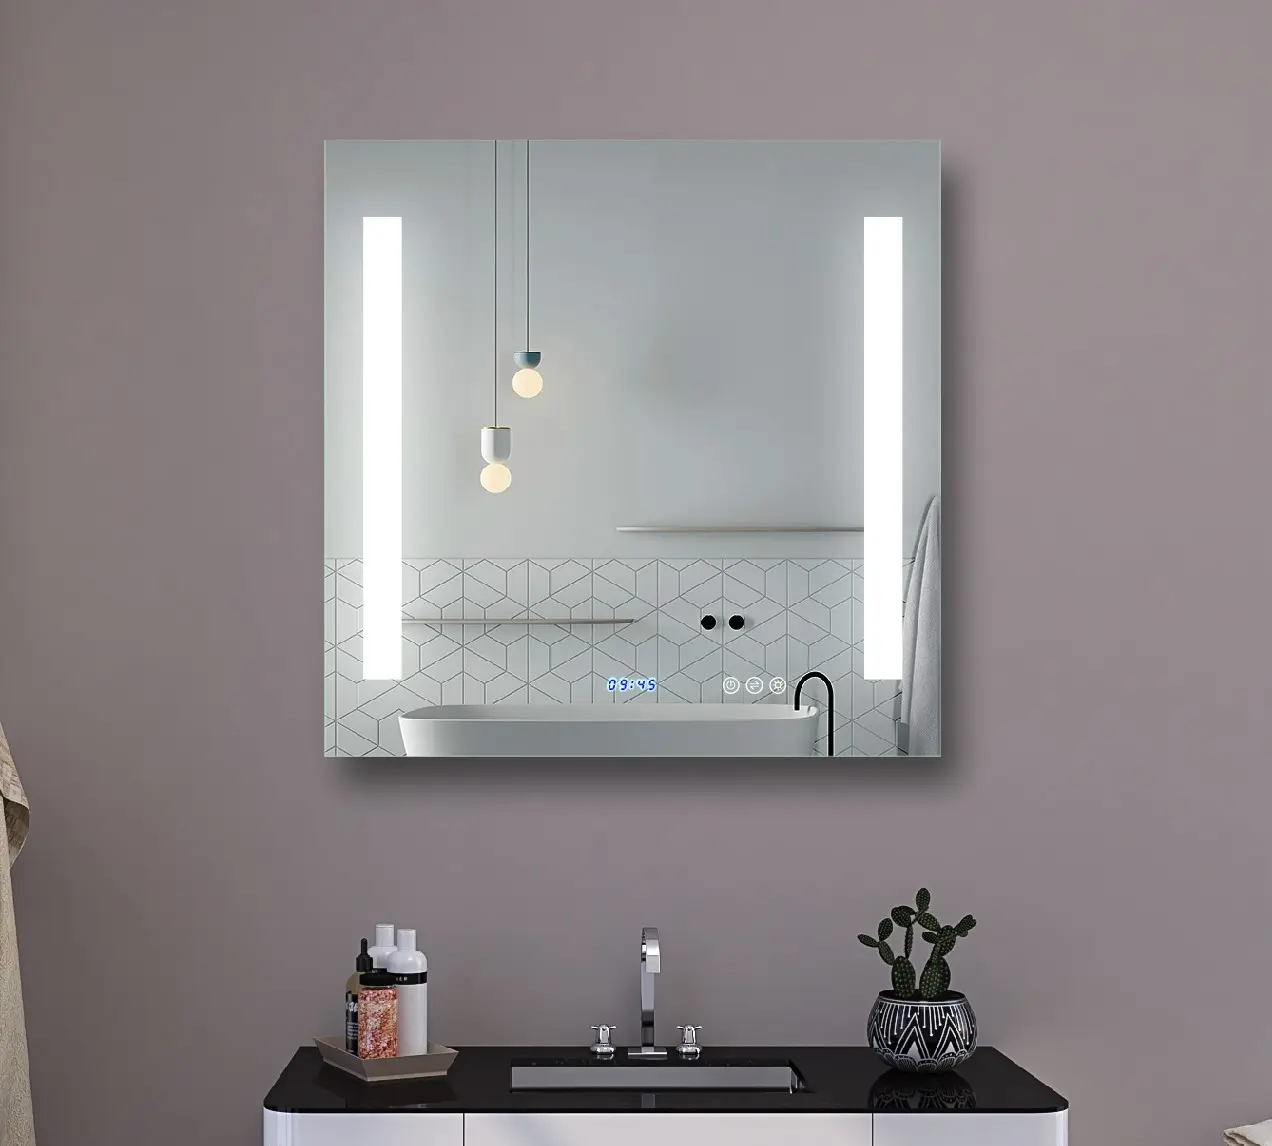 Manufacture Digital Clock Bath Led Mirror LED Light Backlit Touch Screen Smart Wall Bathroom Mirror